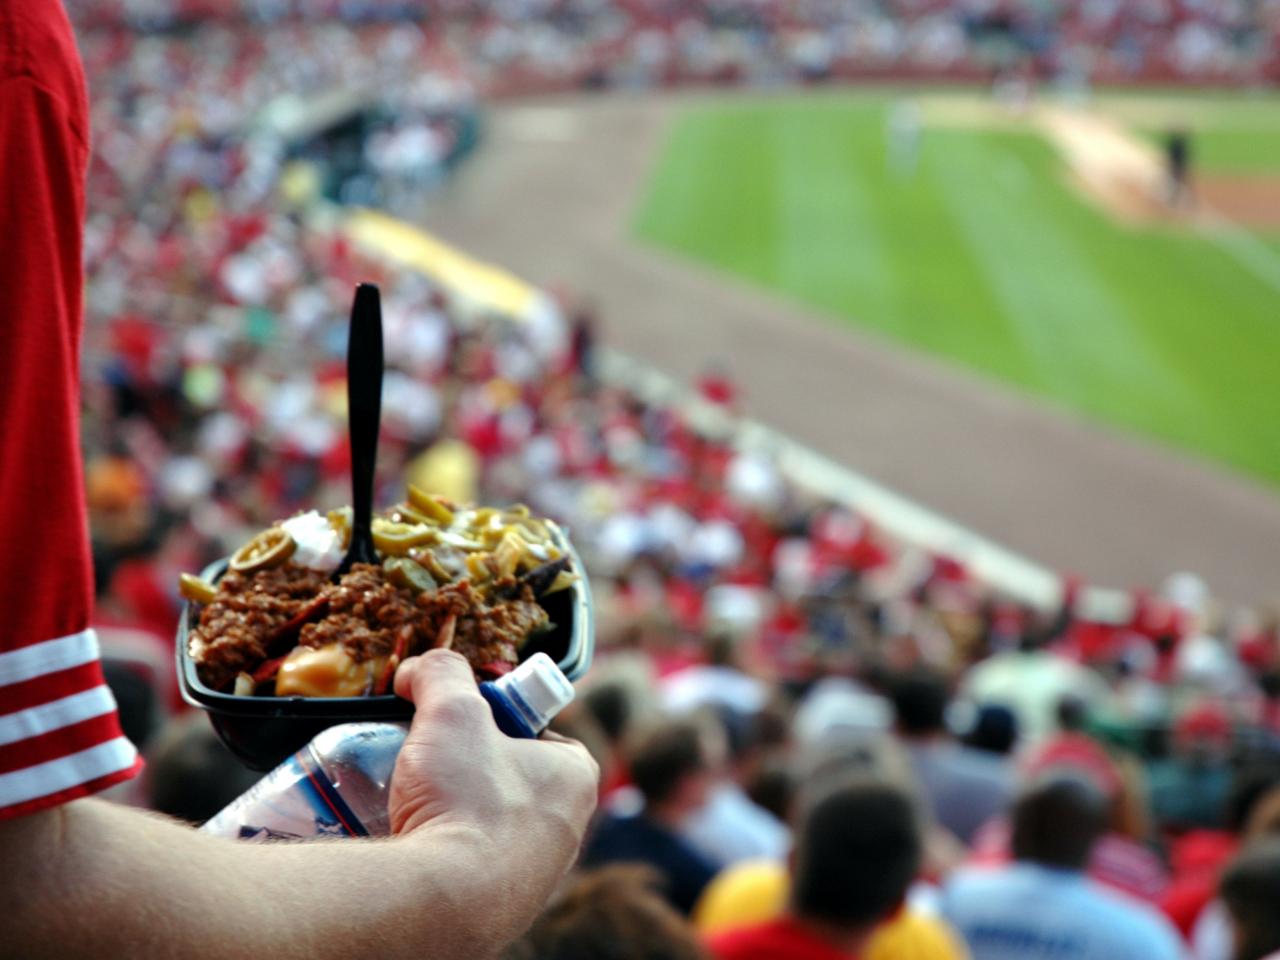 New Yankee Stadium ballpark food for 2023